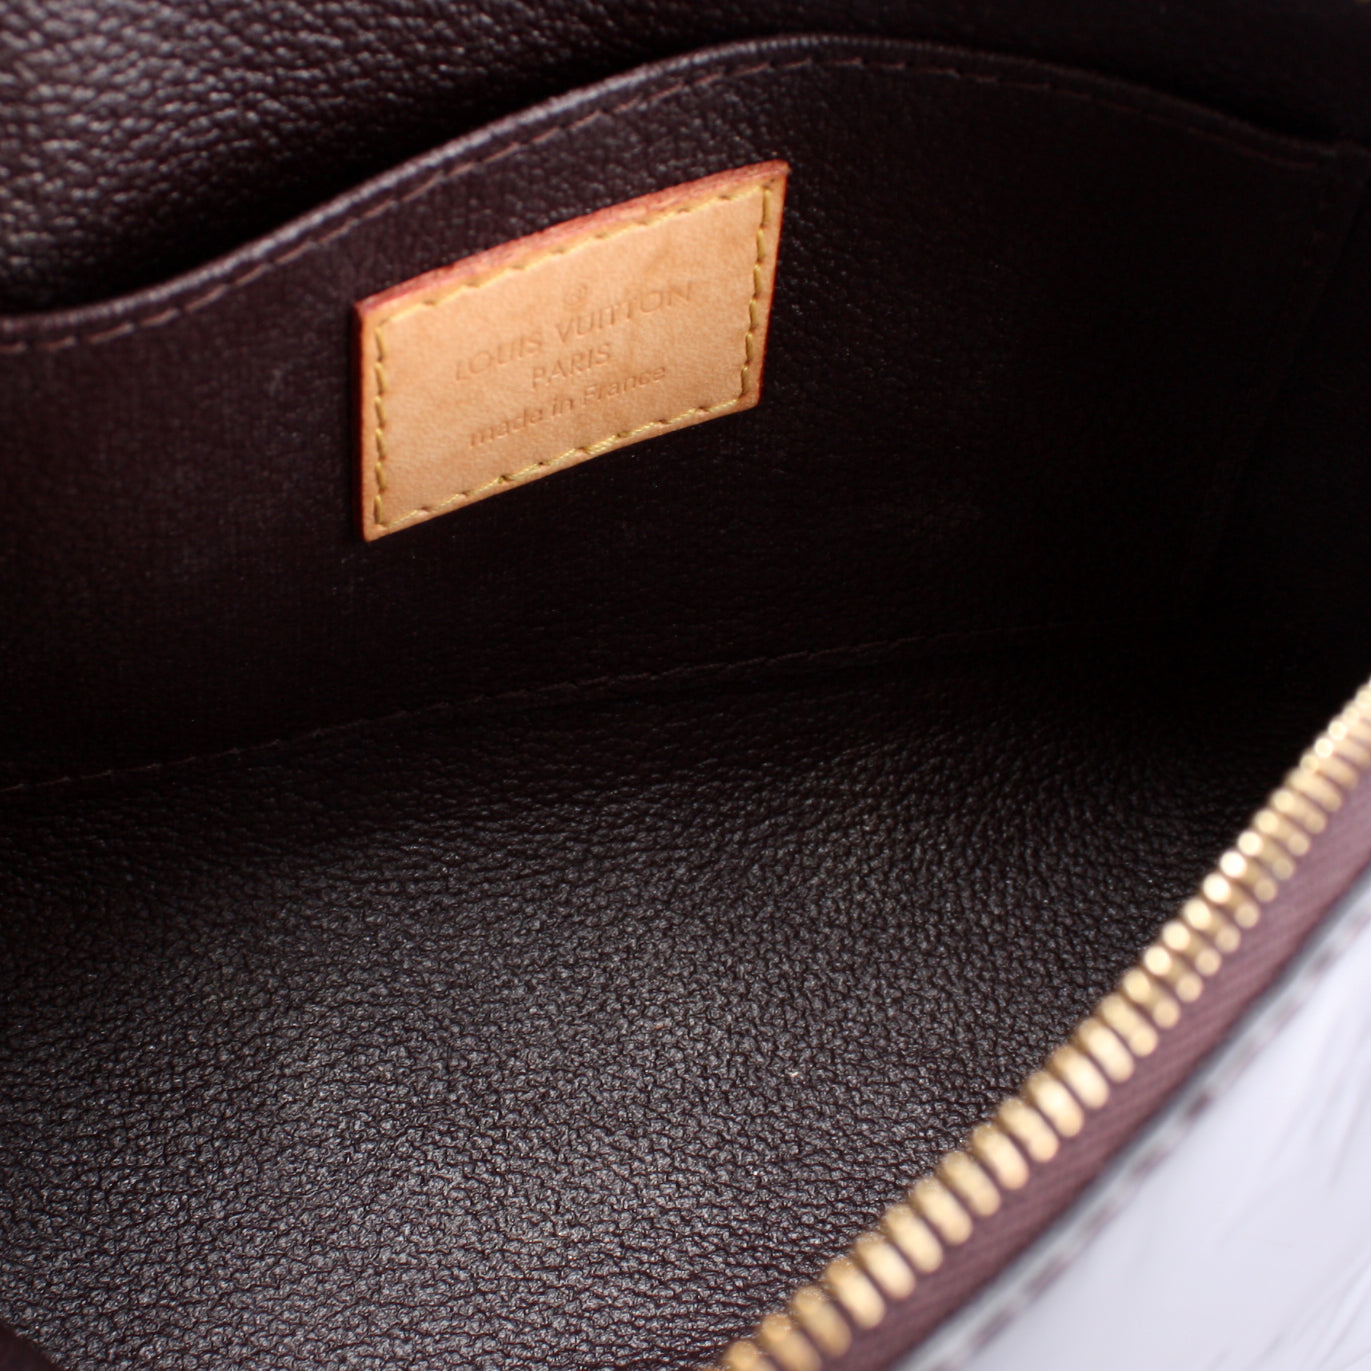 Wapity Case Monogram – Keeks Designer Handbags